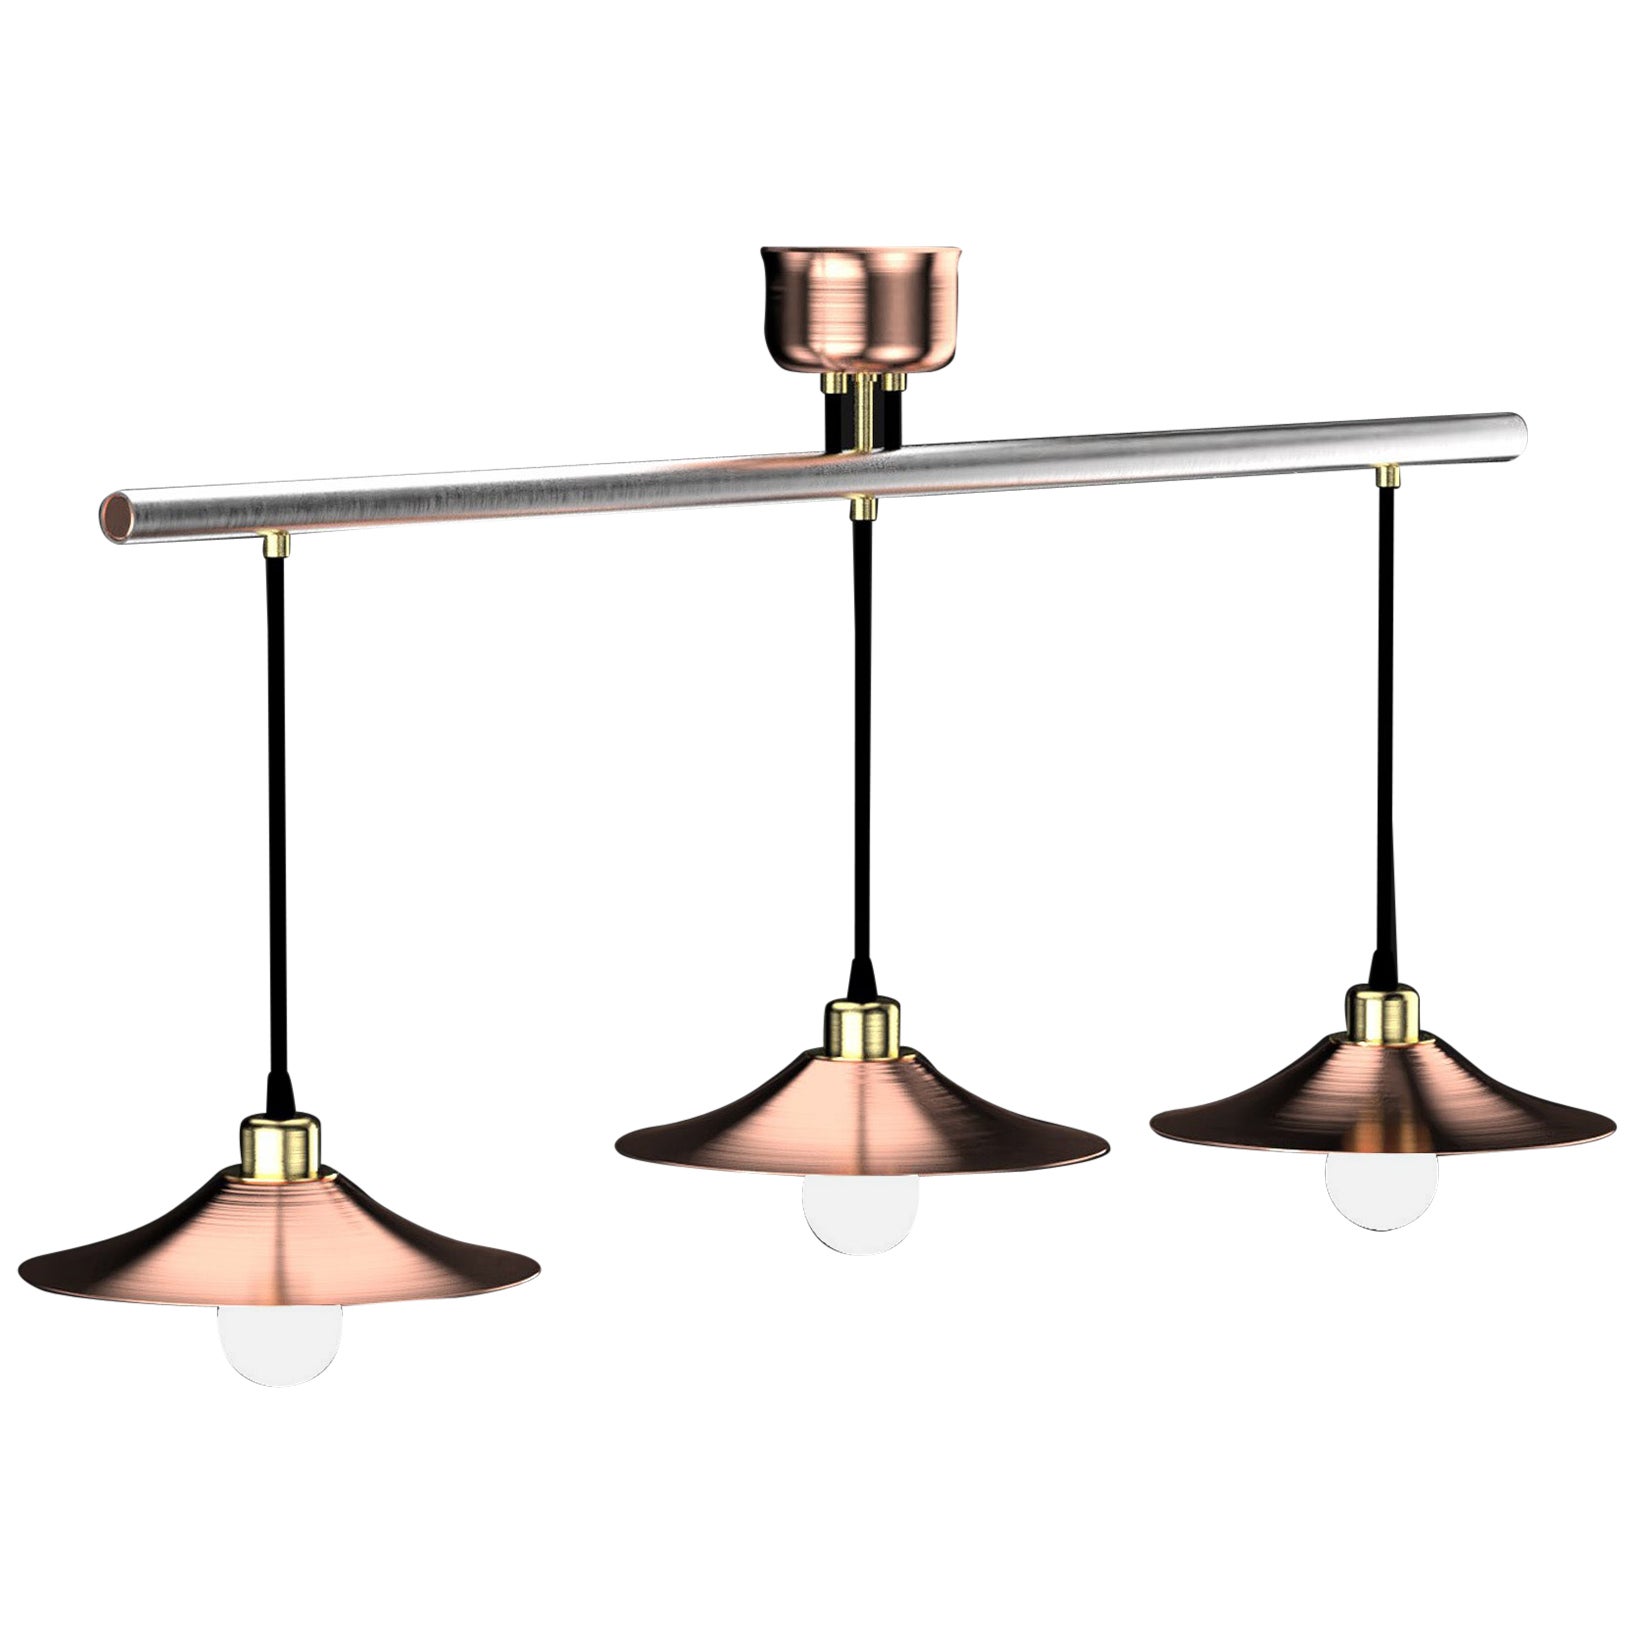 Edimate Genuine Stainless Steel/Copper Ceiling Light (plafonnier en acier inoxydable/cuivre)